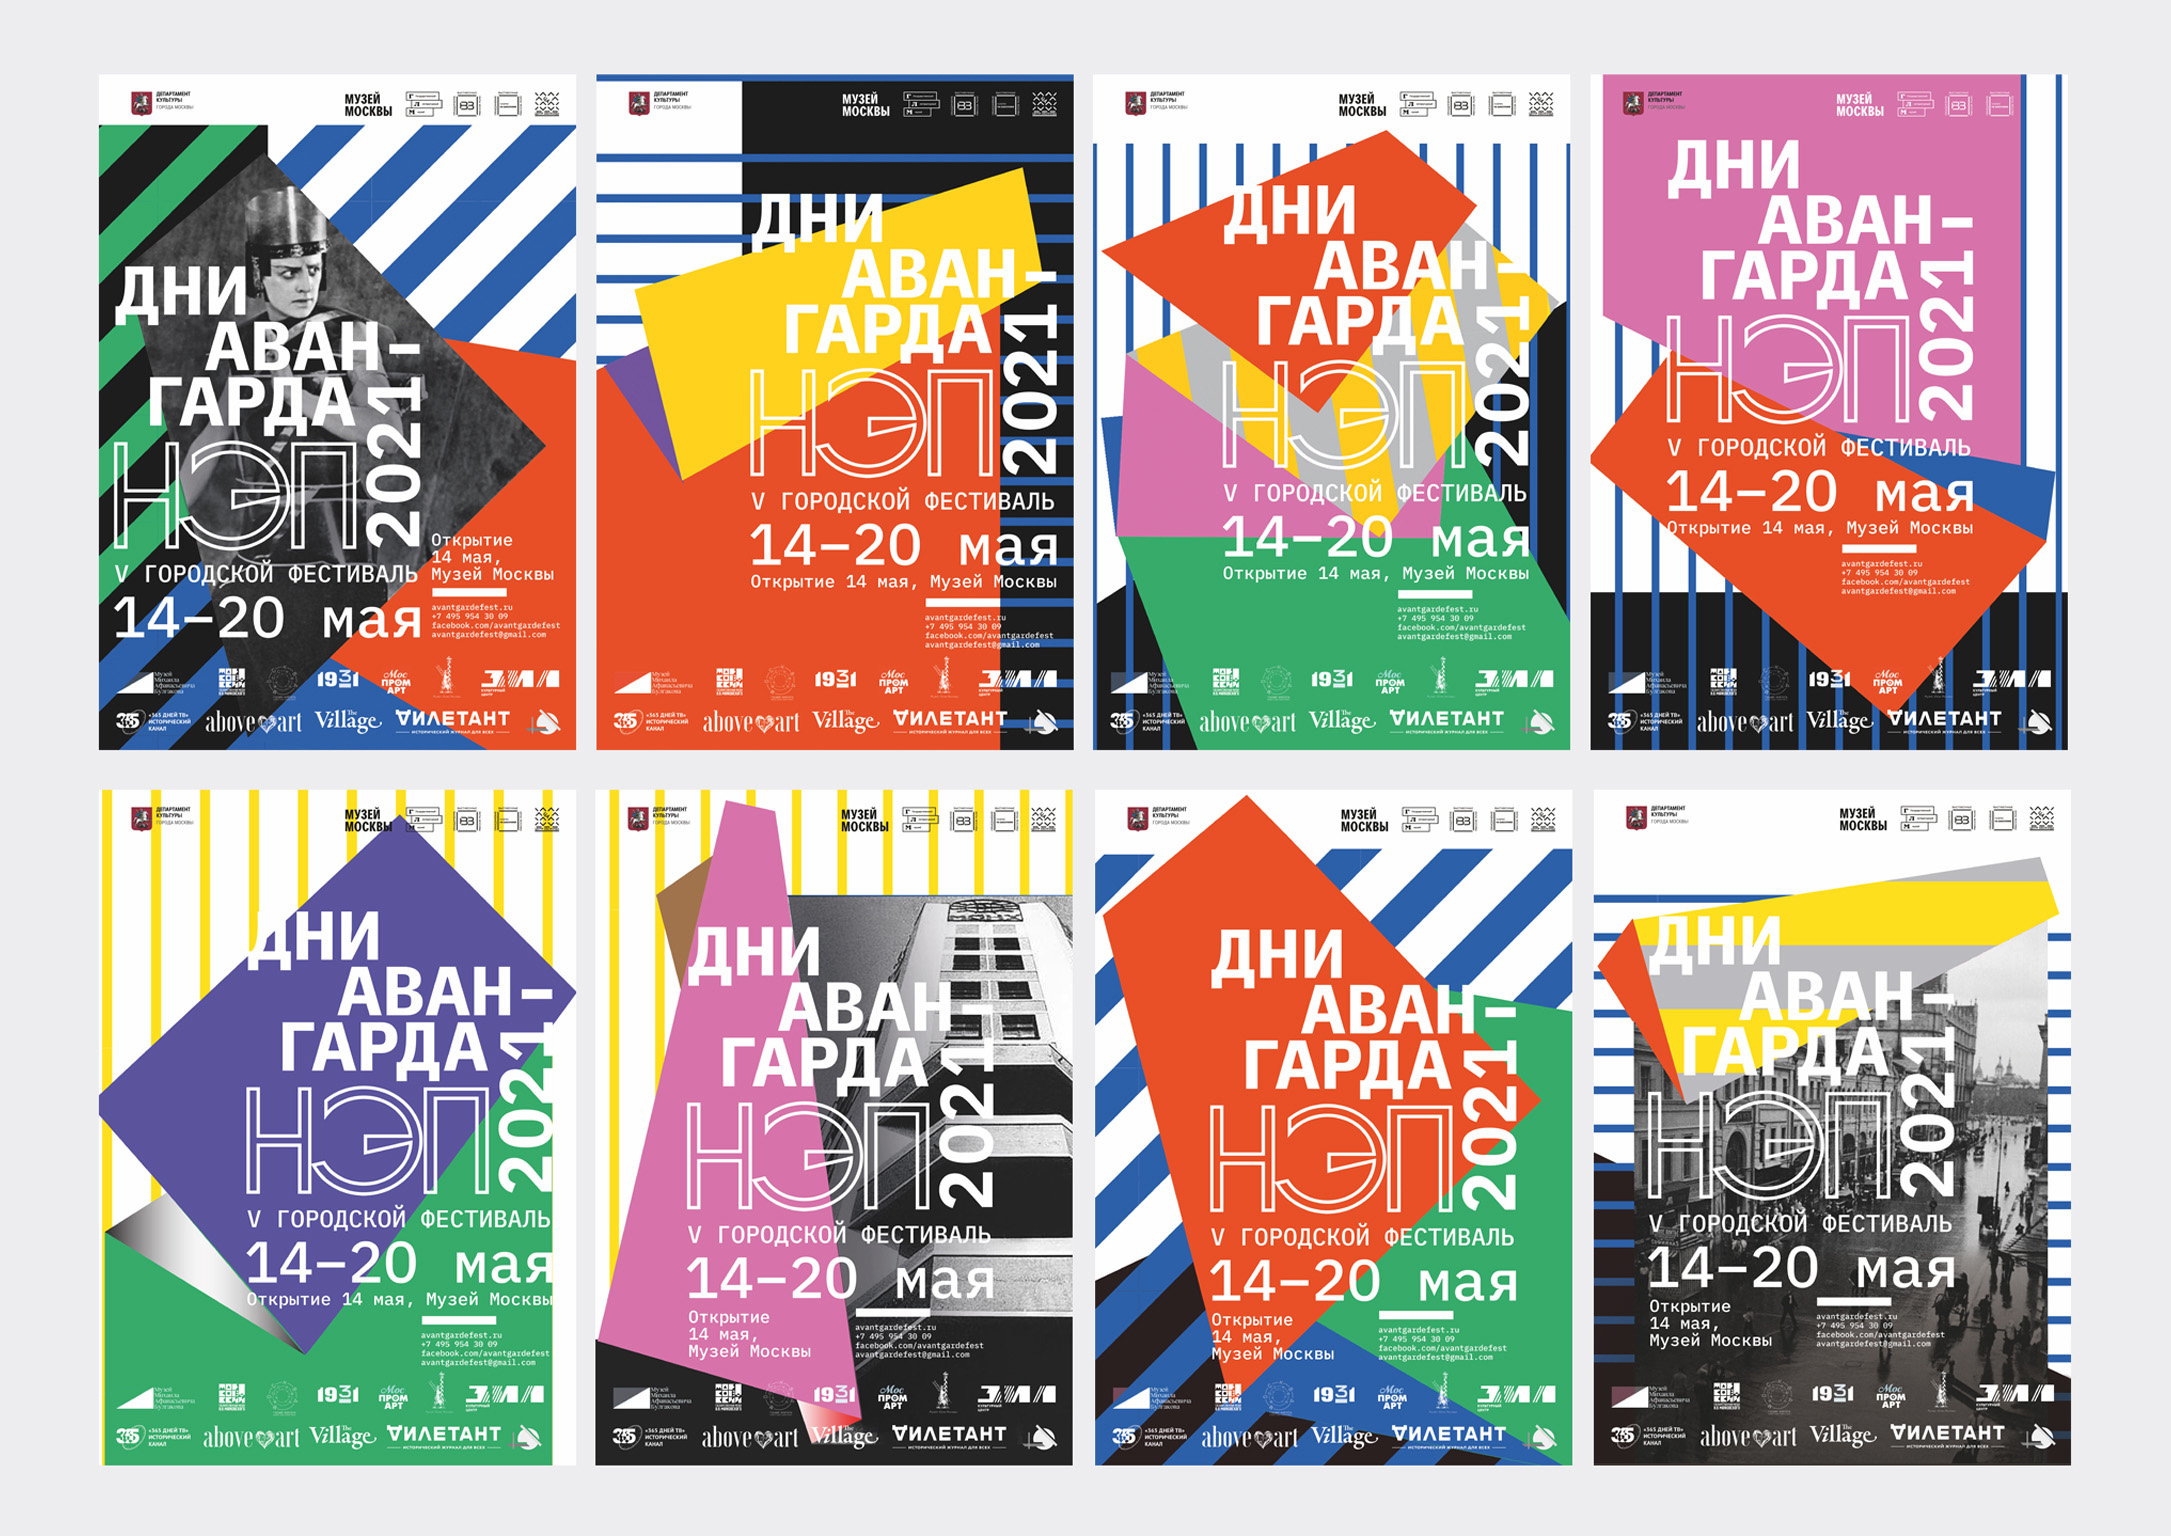 Days of Avantgarde Annual City Festival Visual Identity by Design Studio Baklazanas